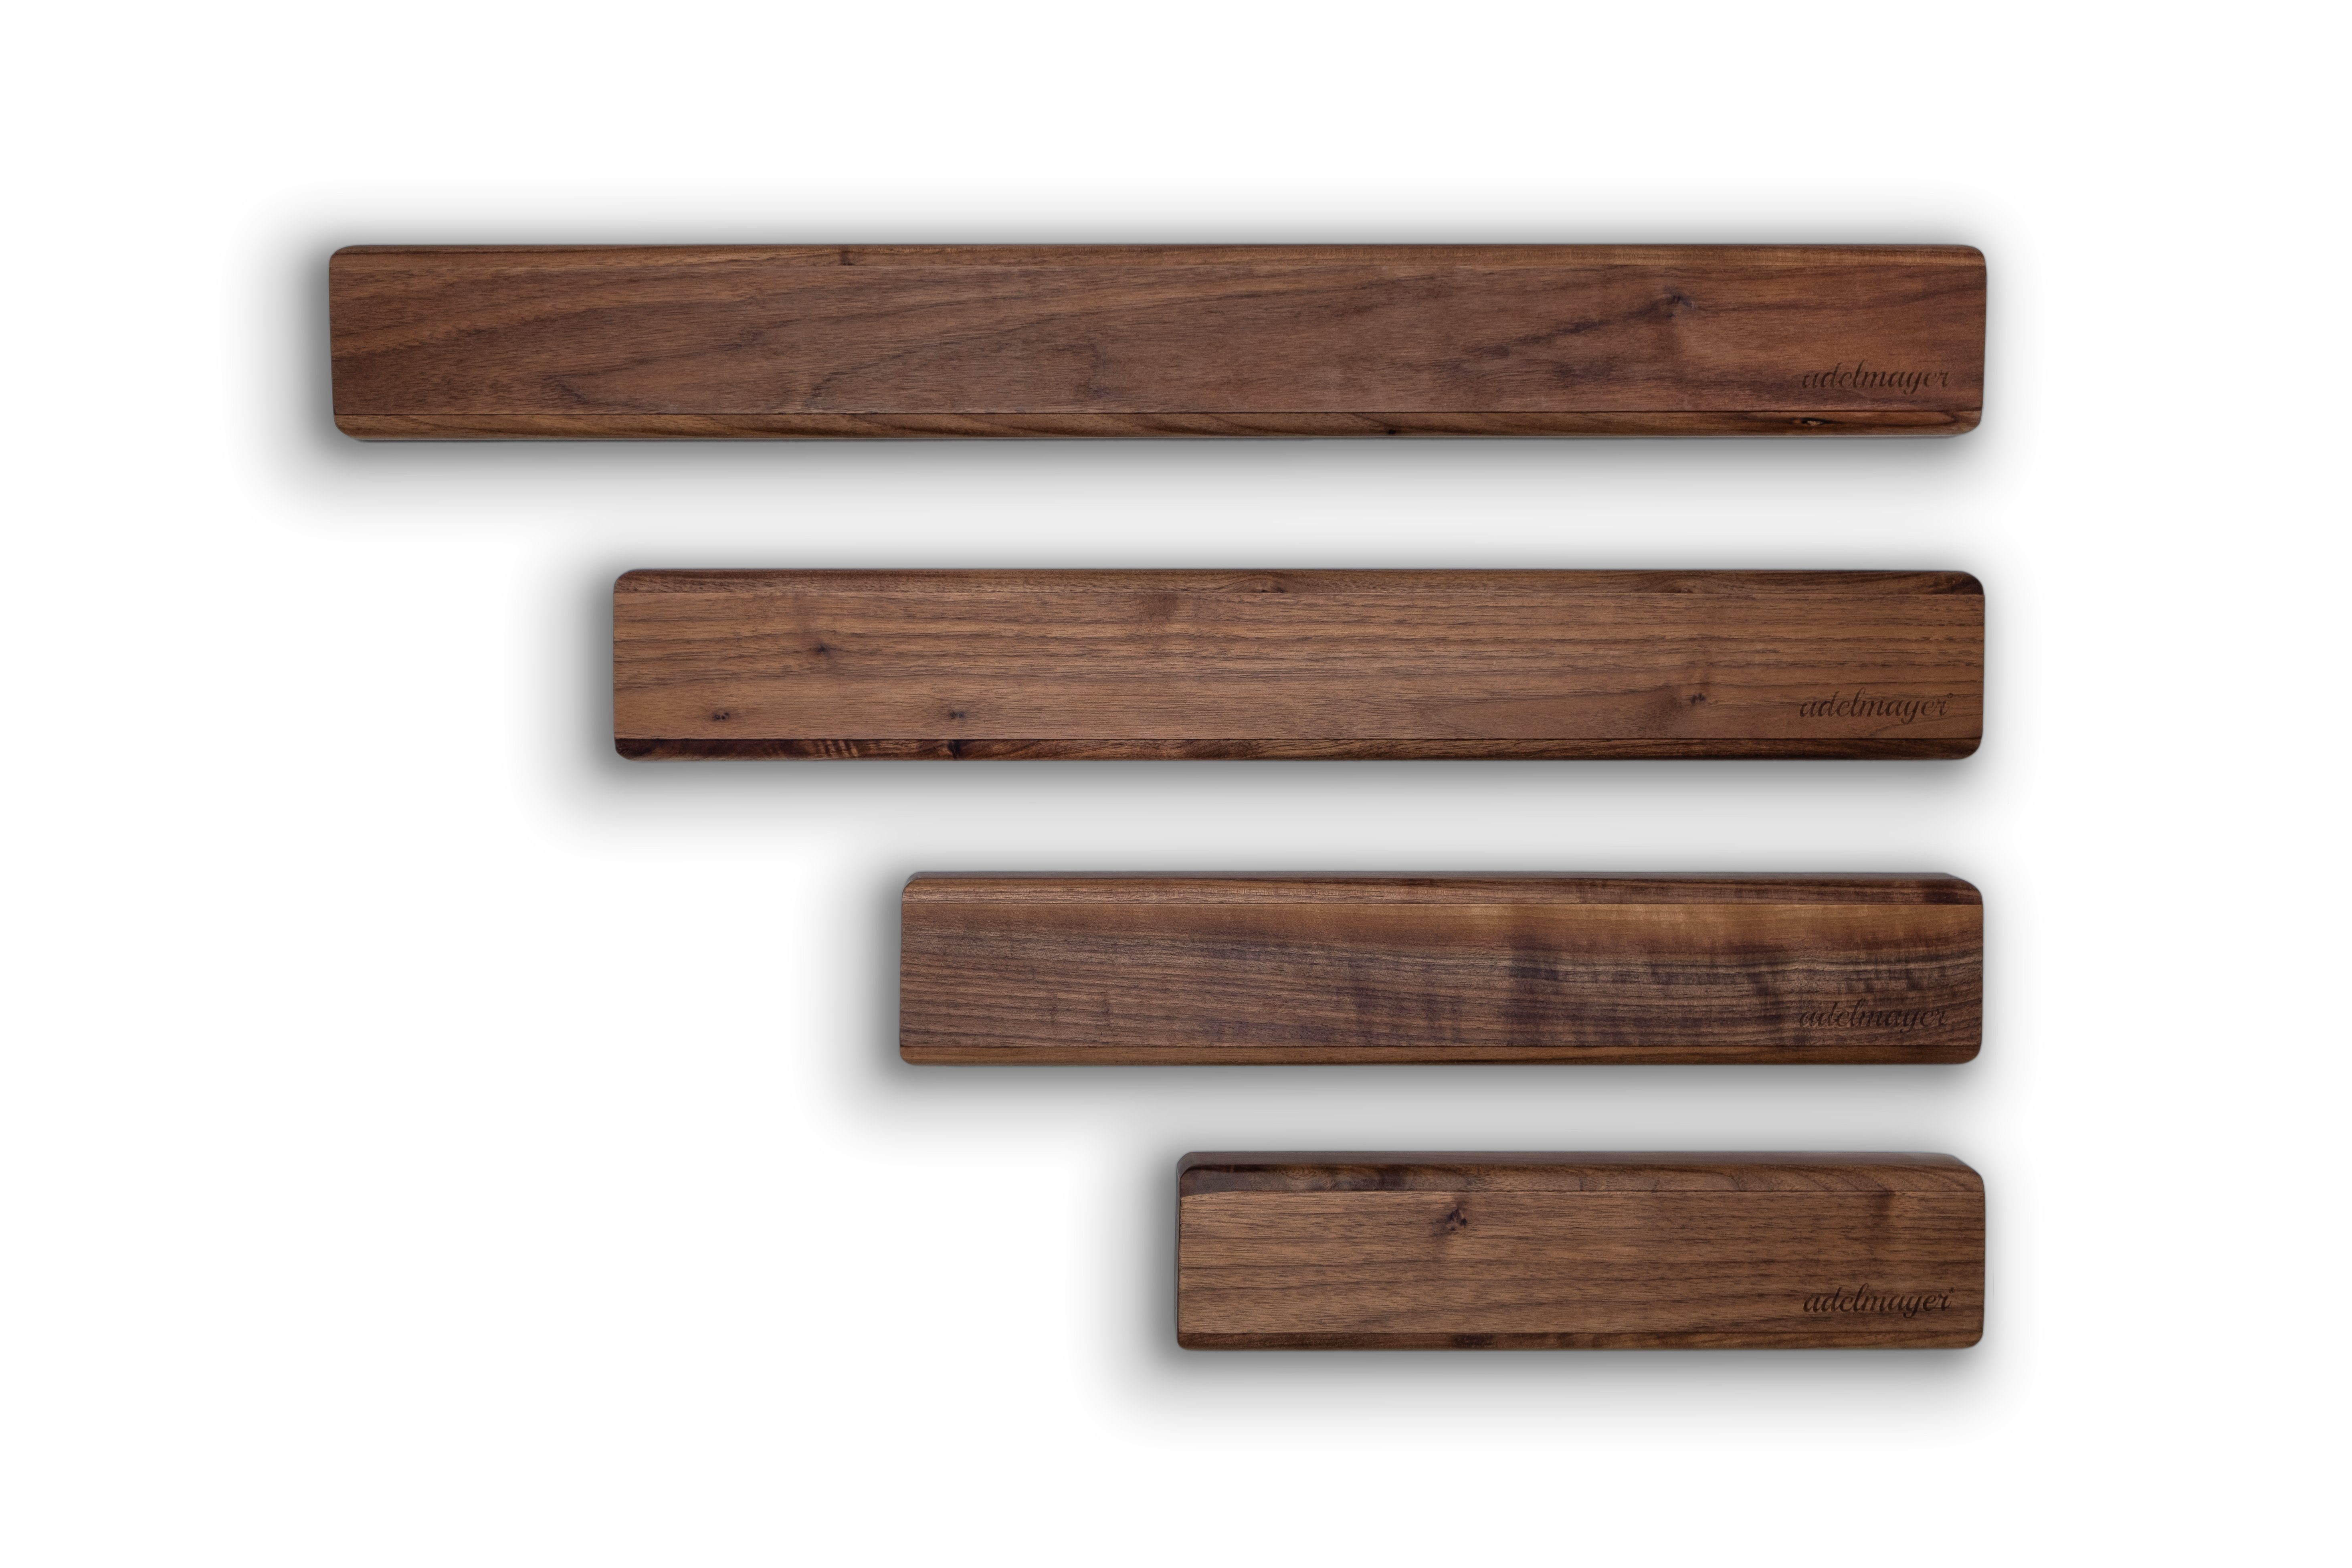 adelmayer Wand-Magnet Messer-Leiste in verschiedenen Längen, aus hochwertigem Walnuss-Holz